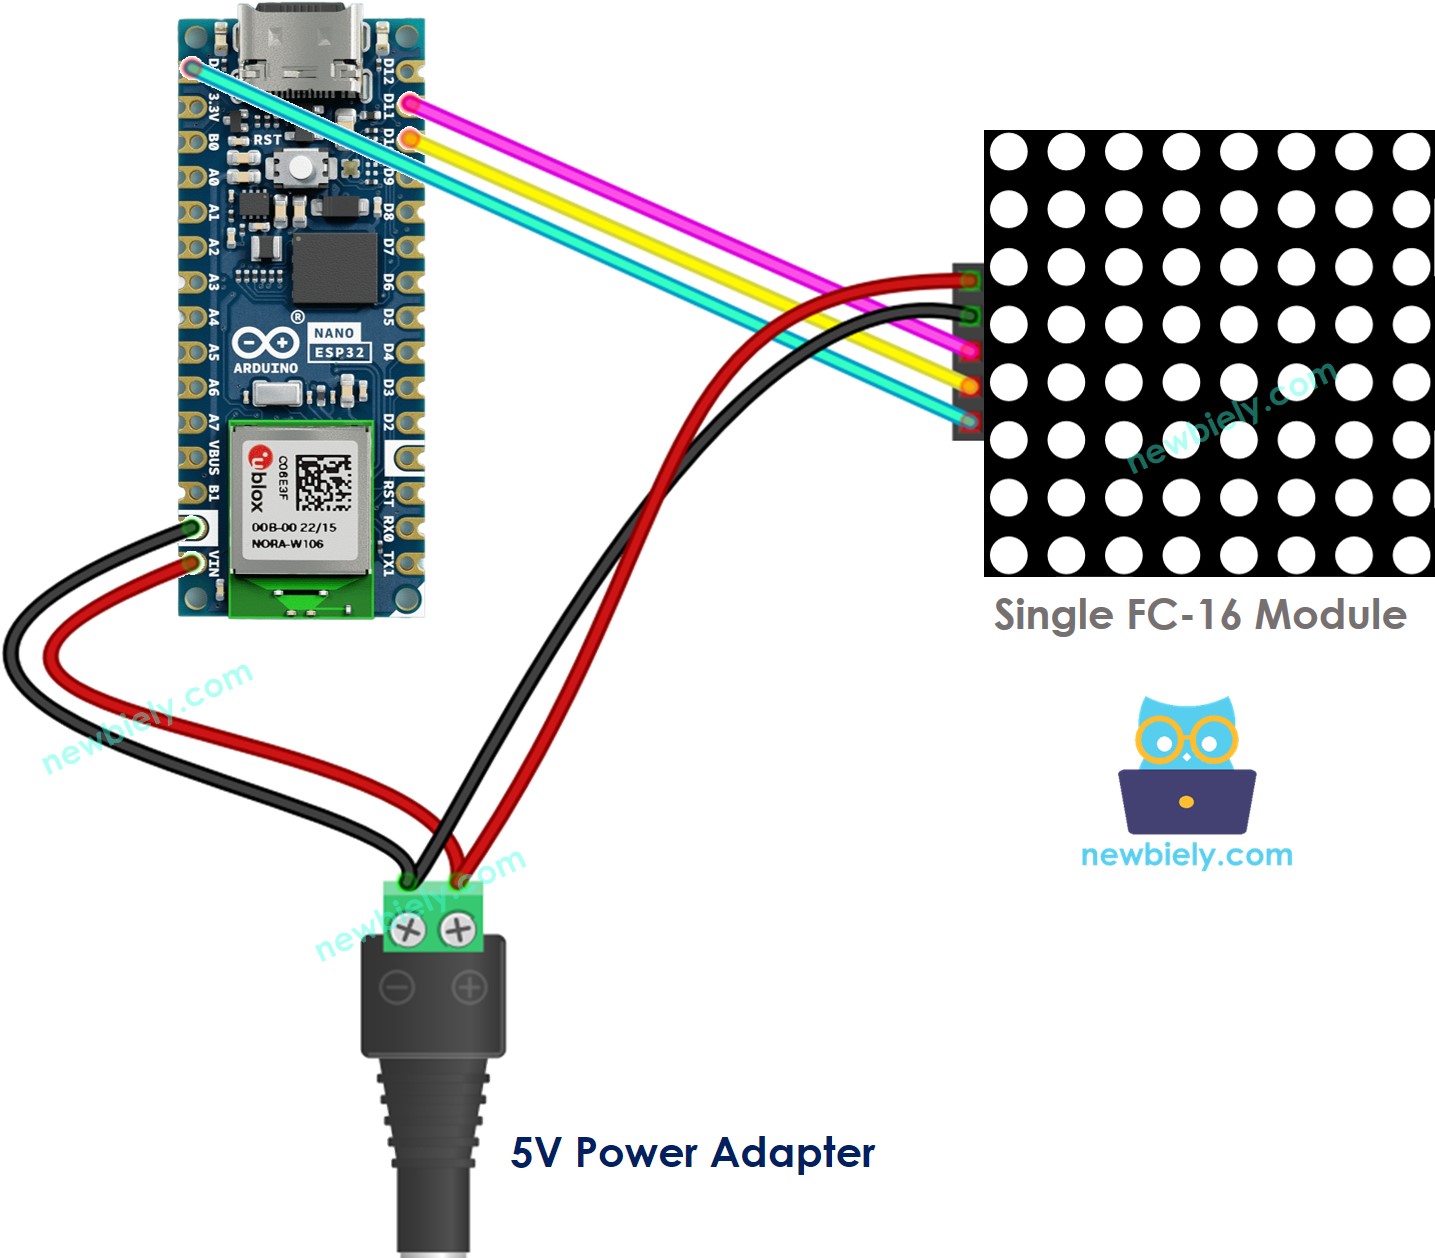 The wiring diagram between Arduino Nano ESP32 and 8x8 LED matrix FC-16